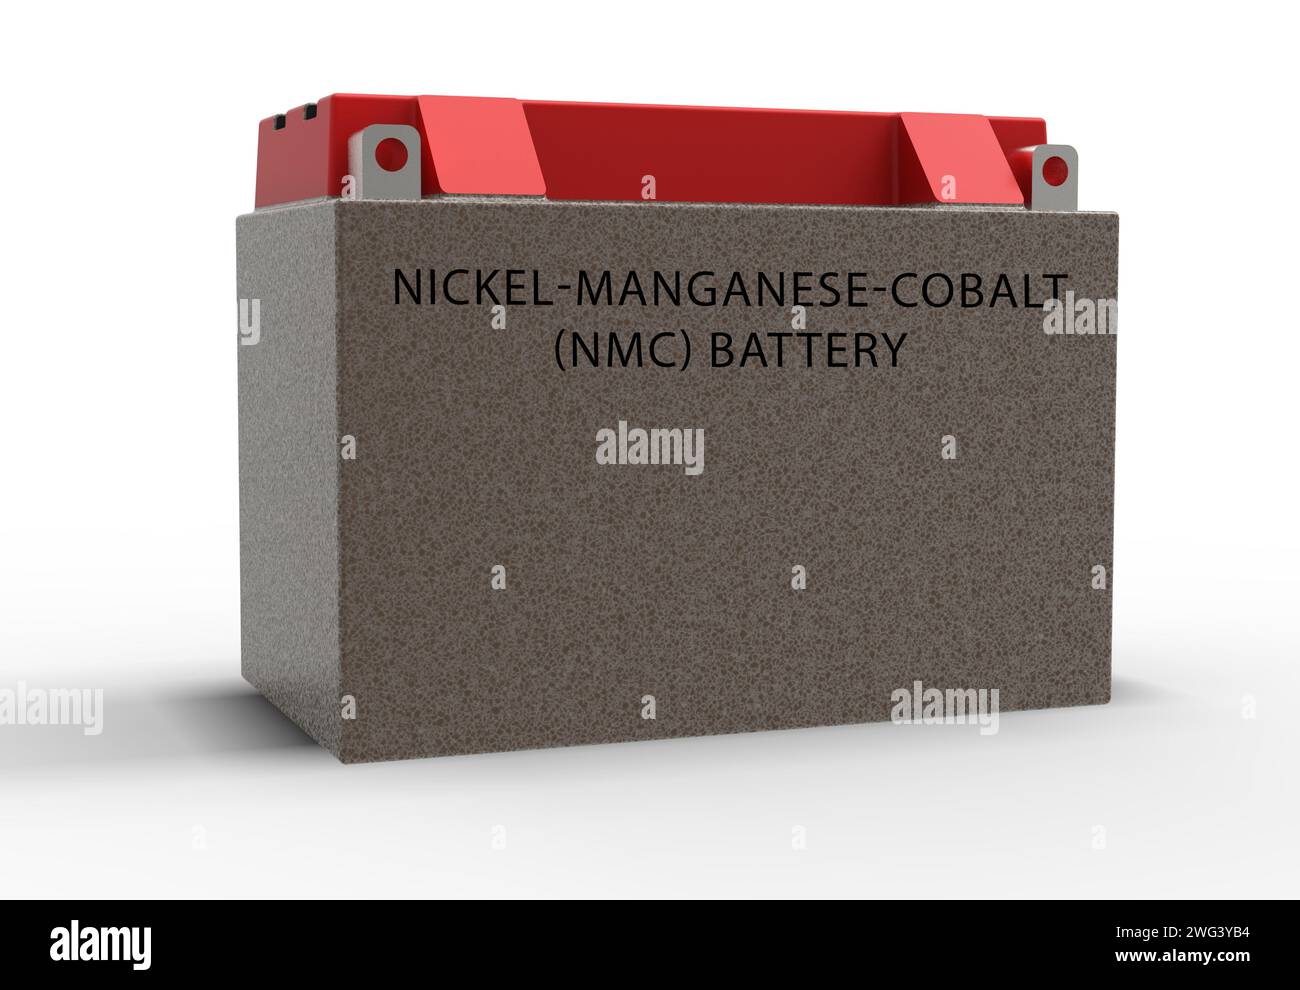 Nickel-manganese-cobalt battery Stock Photo